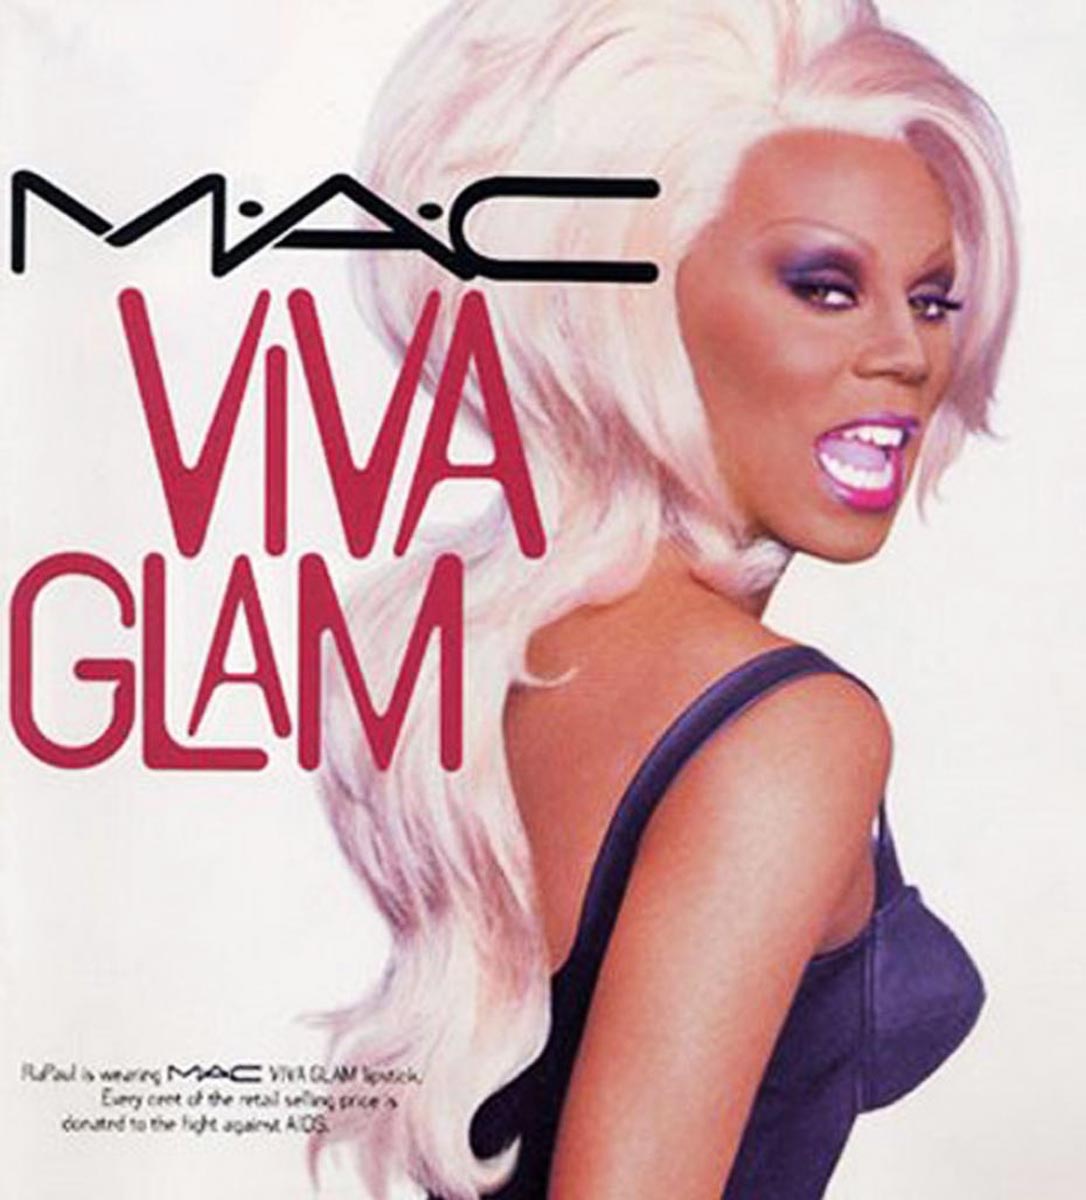 MODECANADAROCKS - RuPaul the original spokesperson for M.A.C Viva Glam